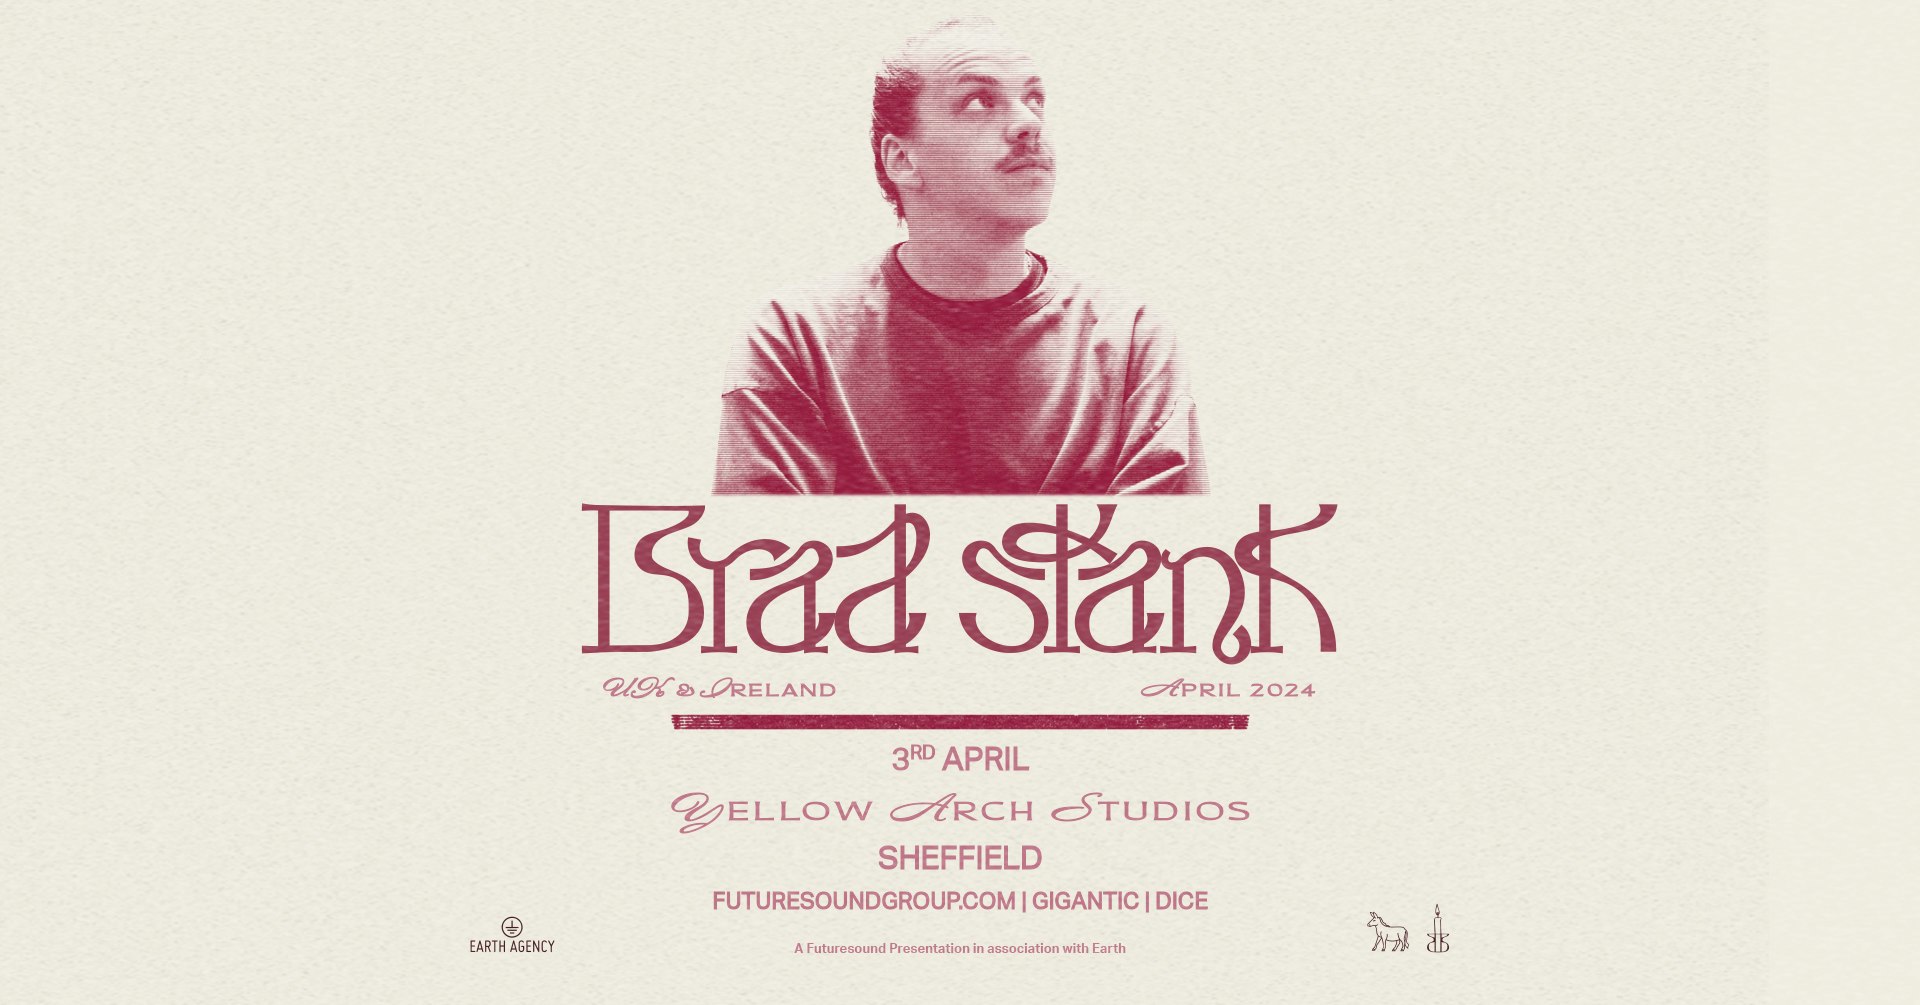 Brad Stank